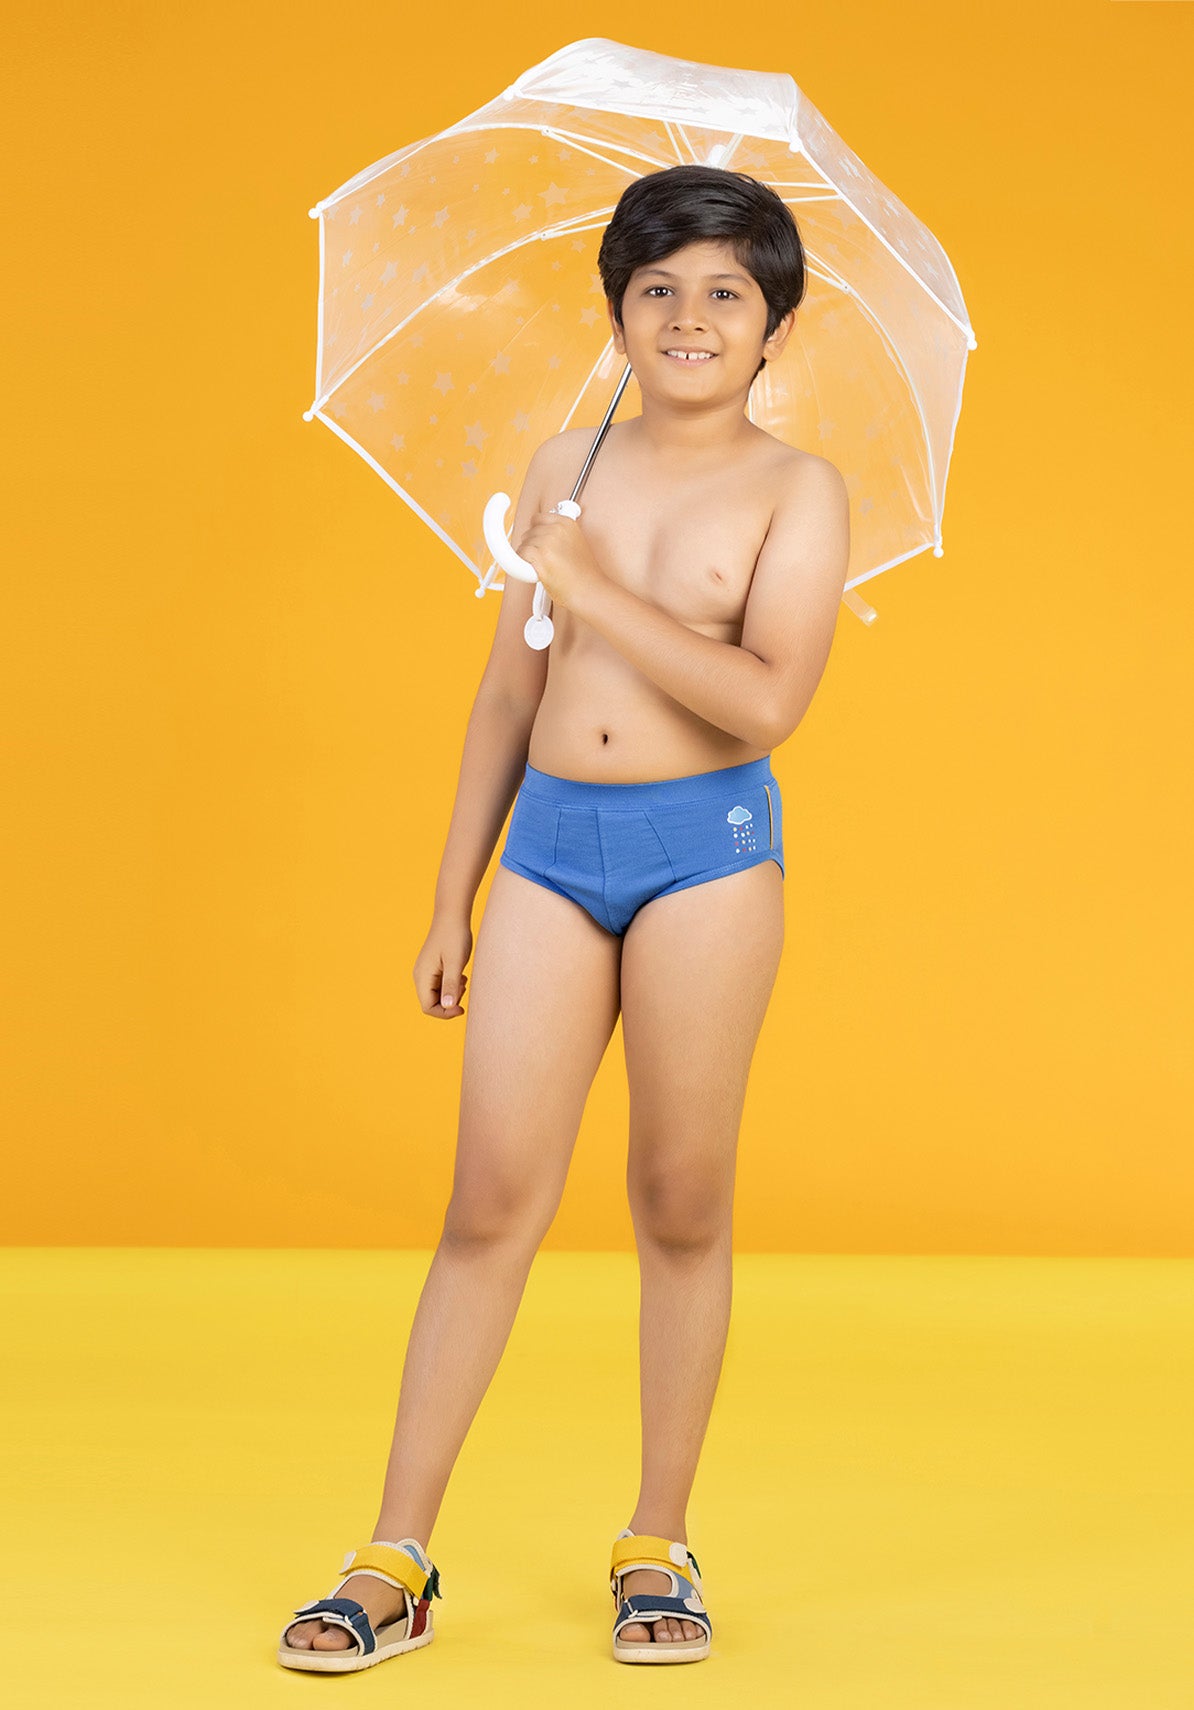 Boys Underwear - Buy Underwears for Boys Online in India